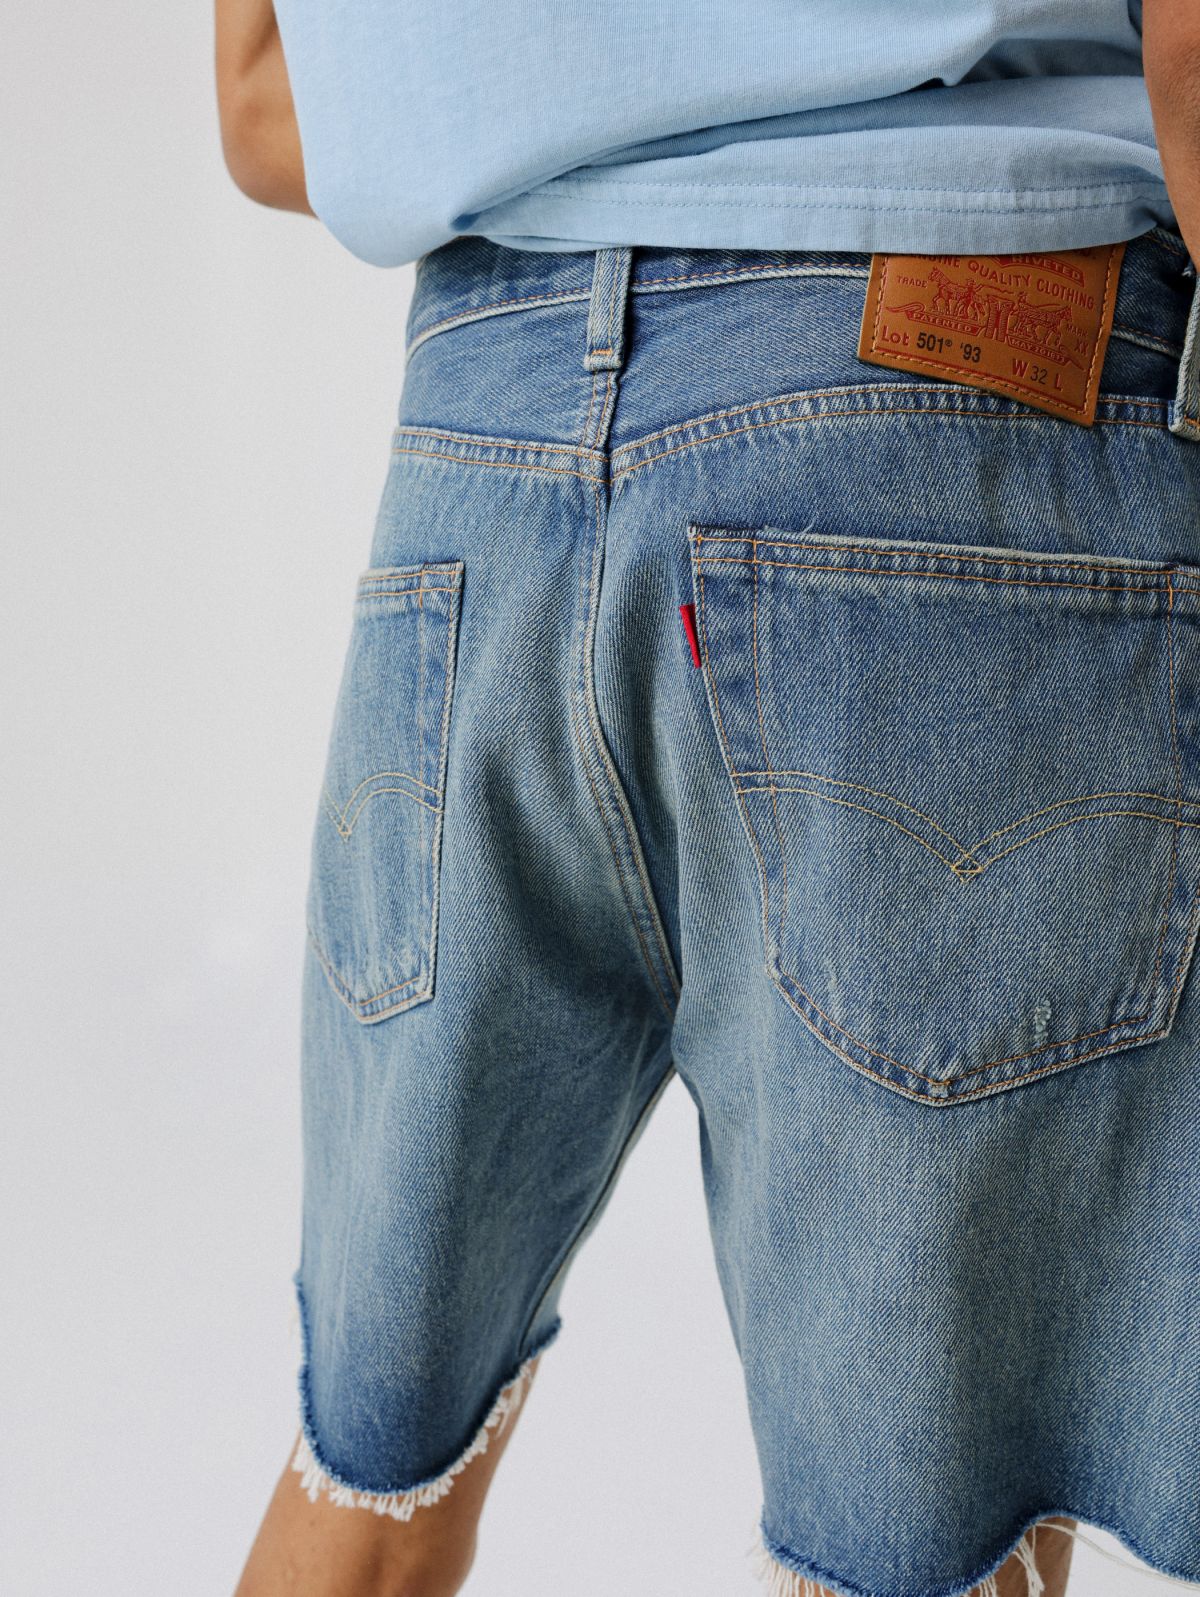  מכנסי ג'ינס קצרים 501 של LEVIS